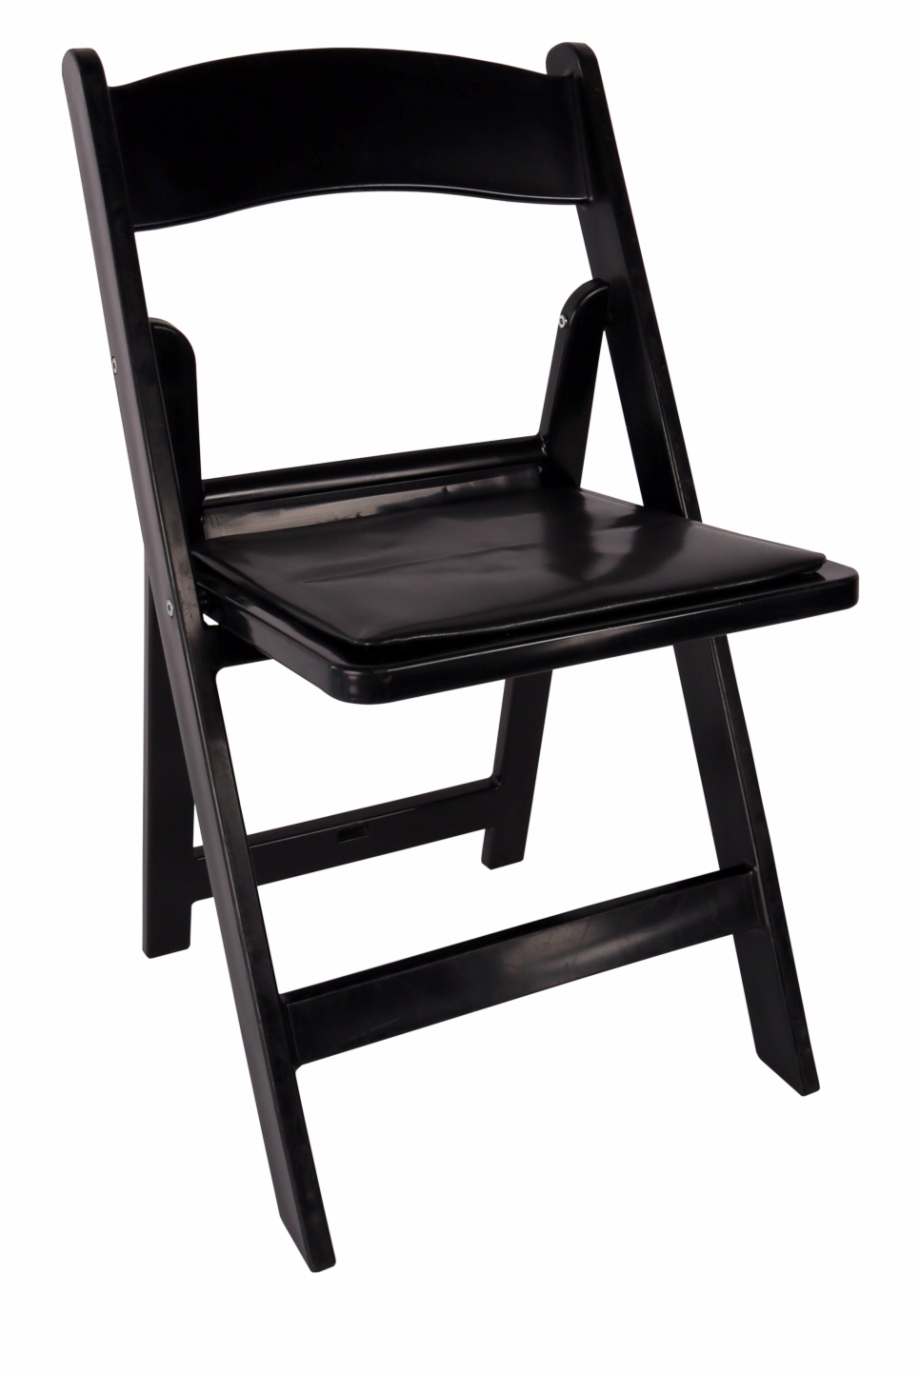 Black Padded Folding Chairs Fresh Chair Black Resin